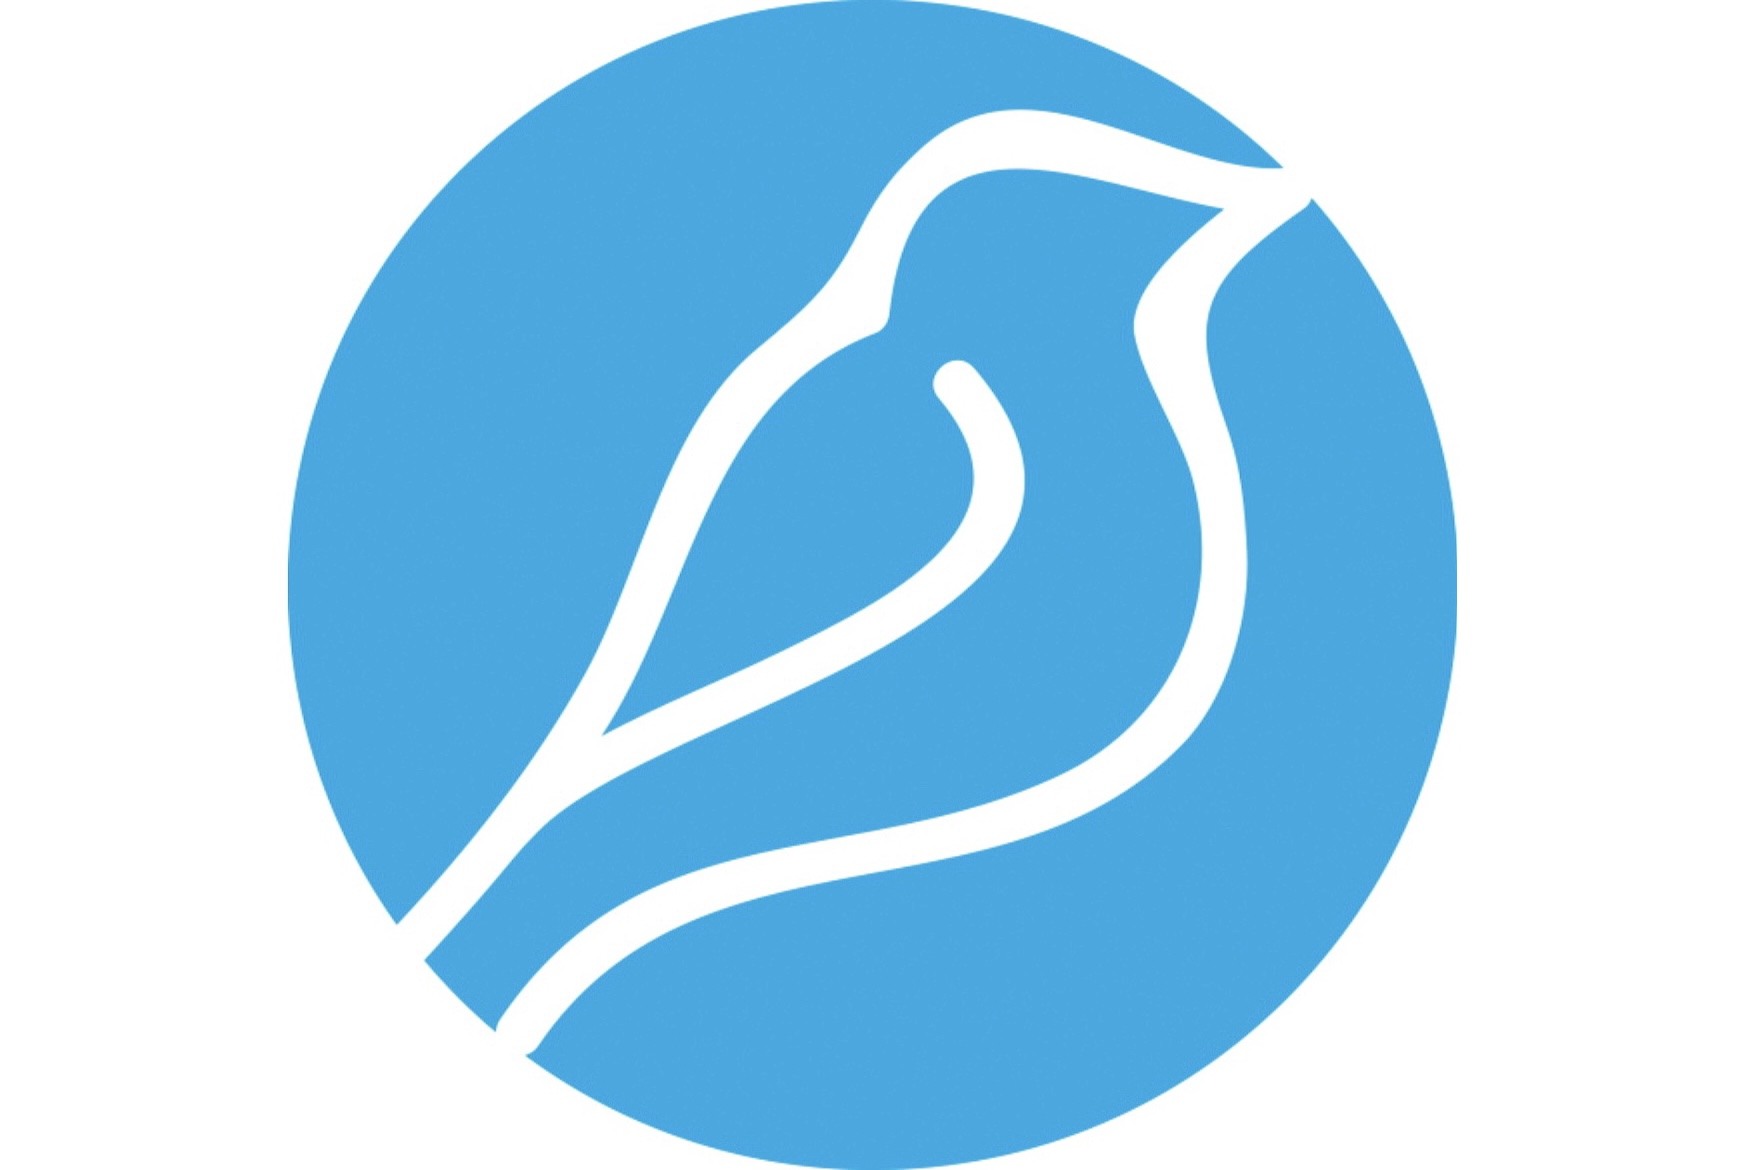 Bluebird - The IT Staff Augmentation Company